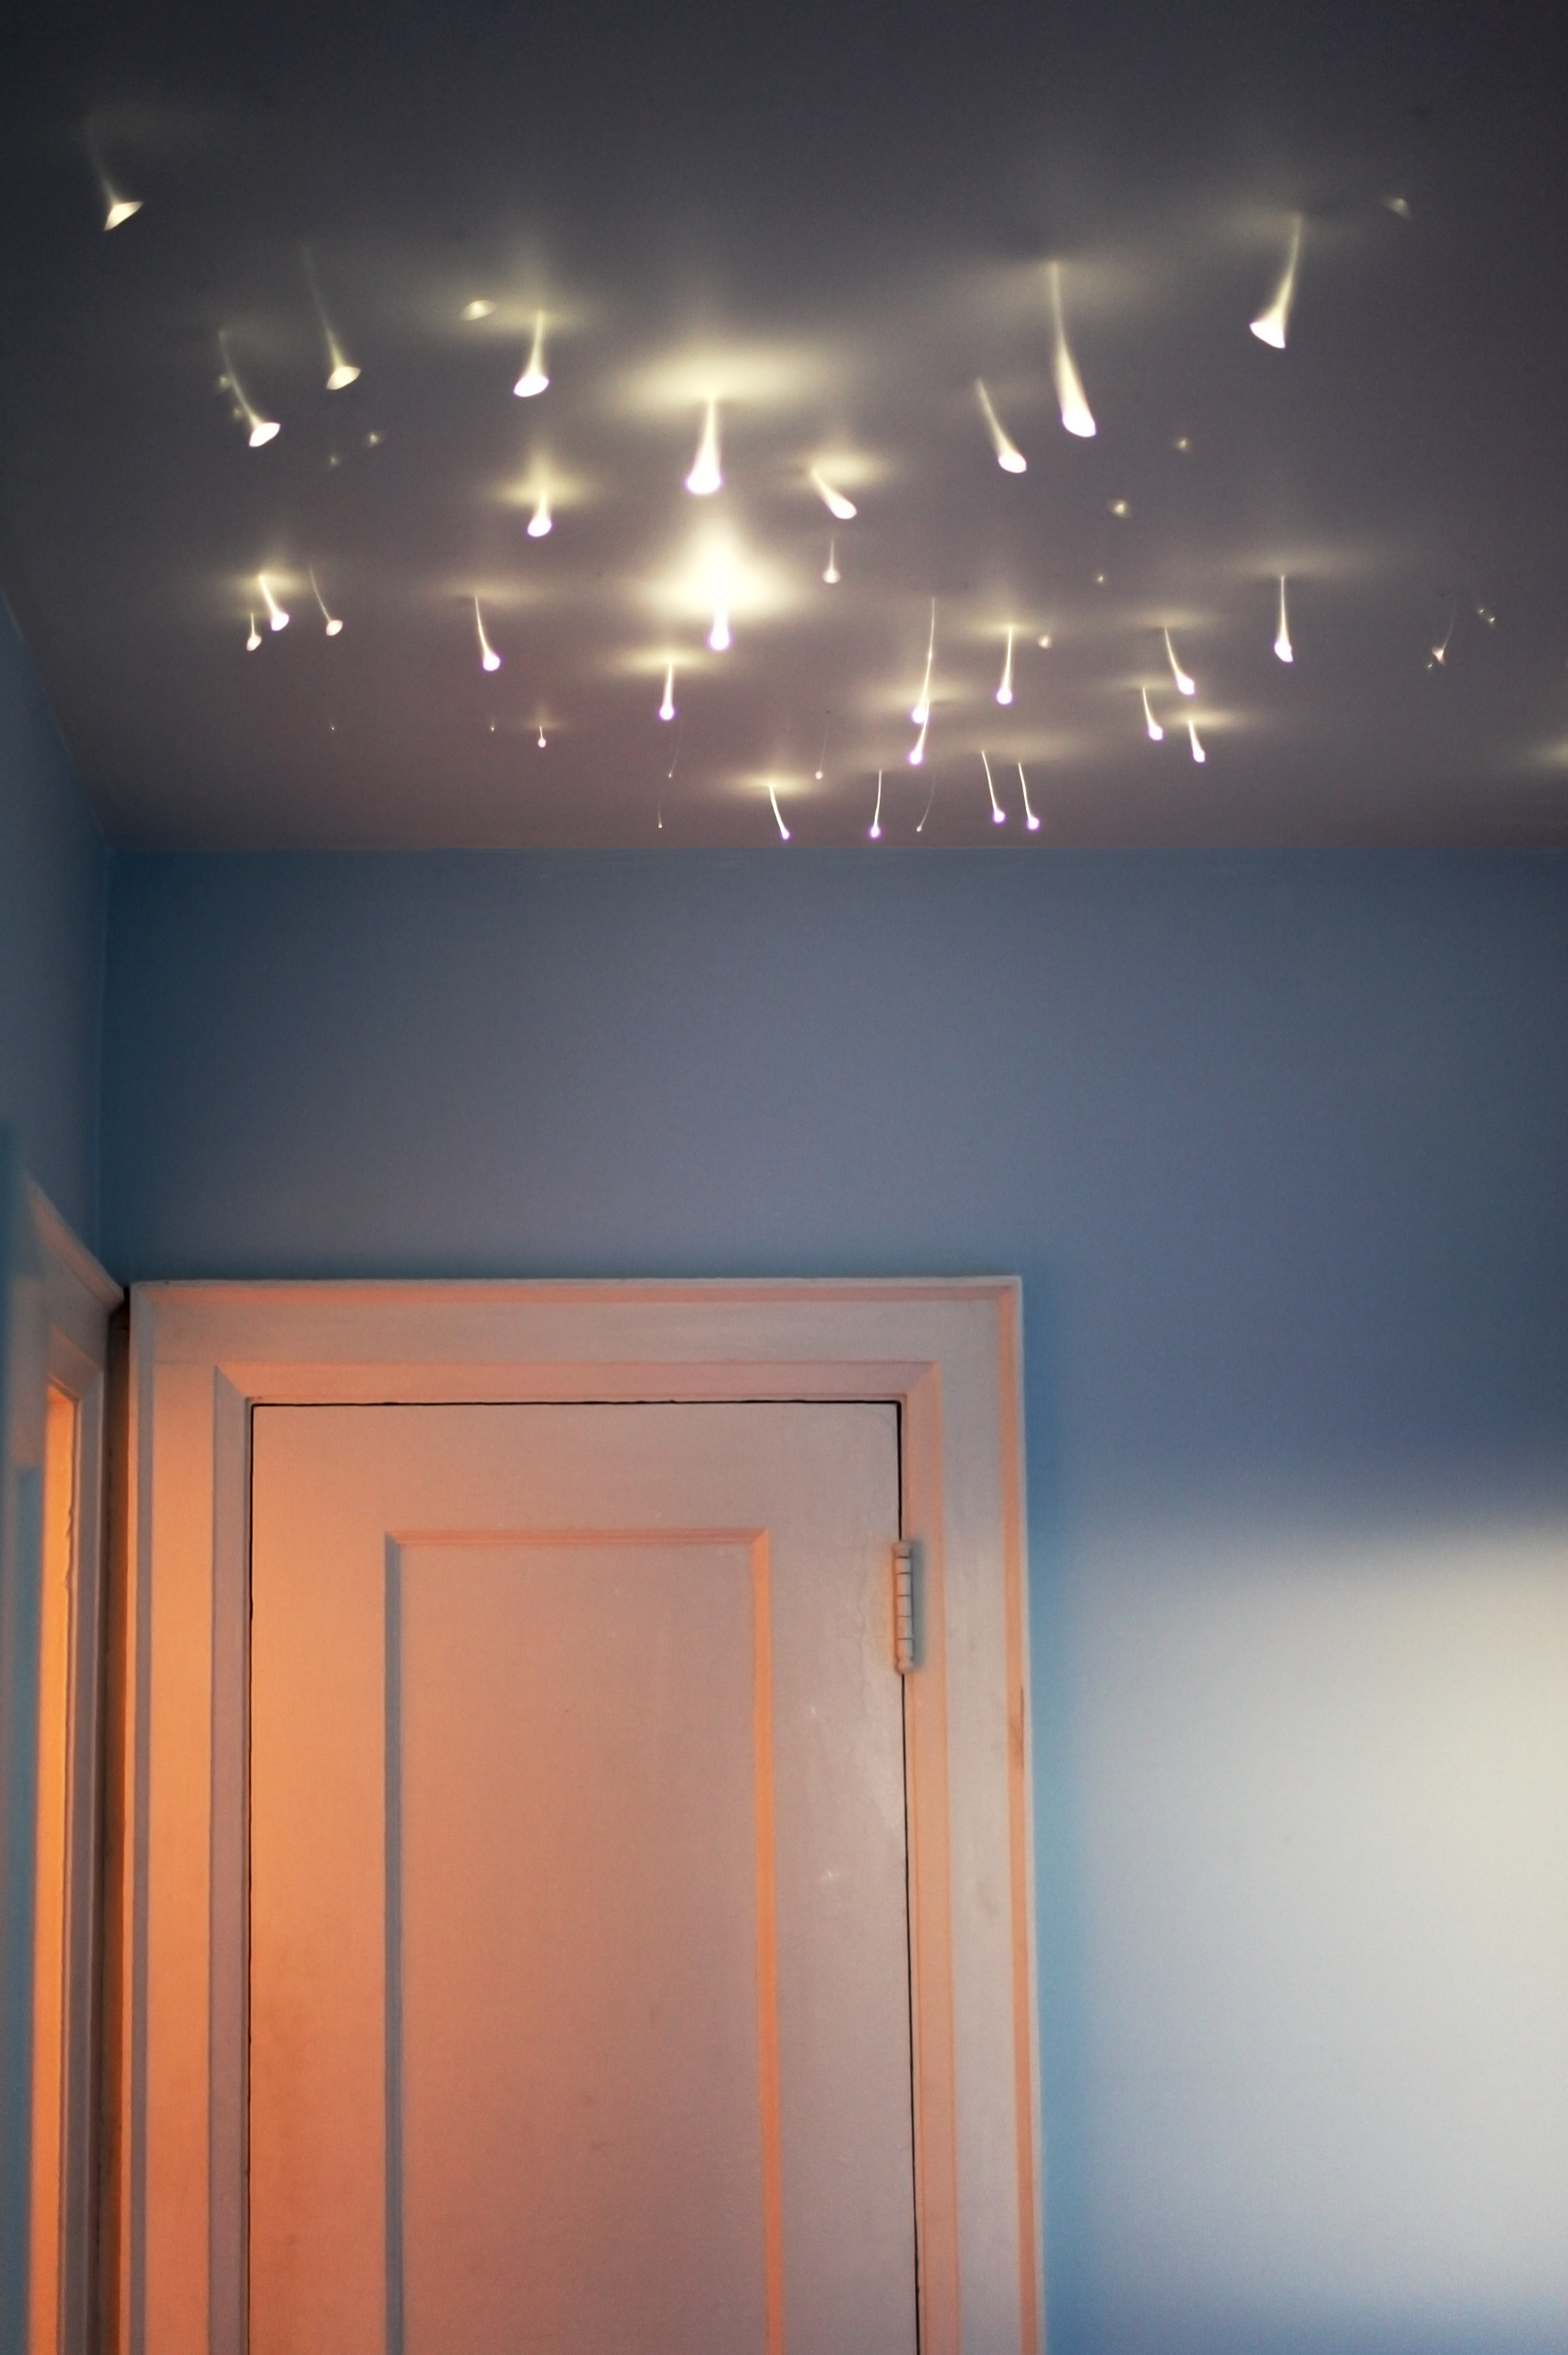 ceiling star lights for nursery